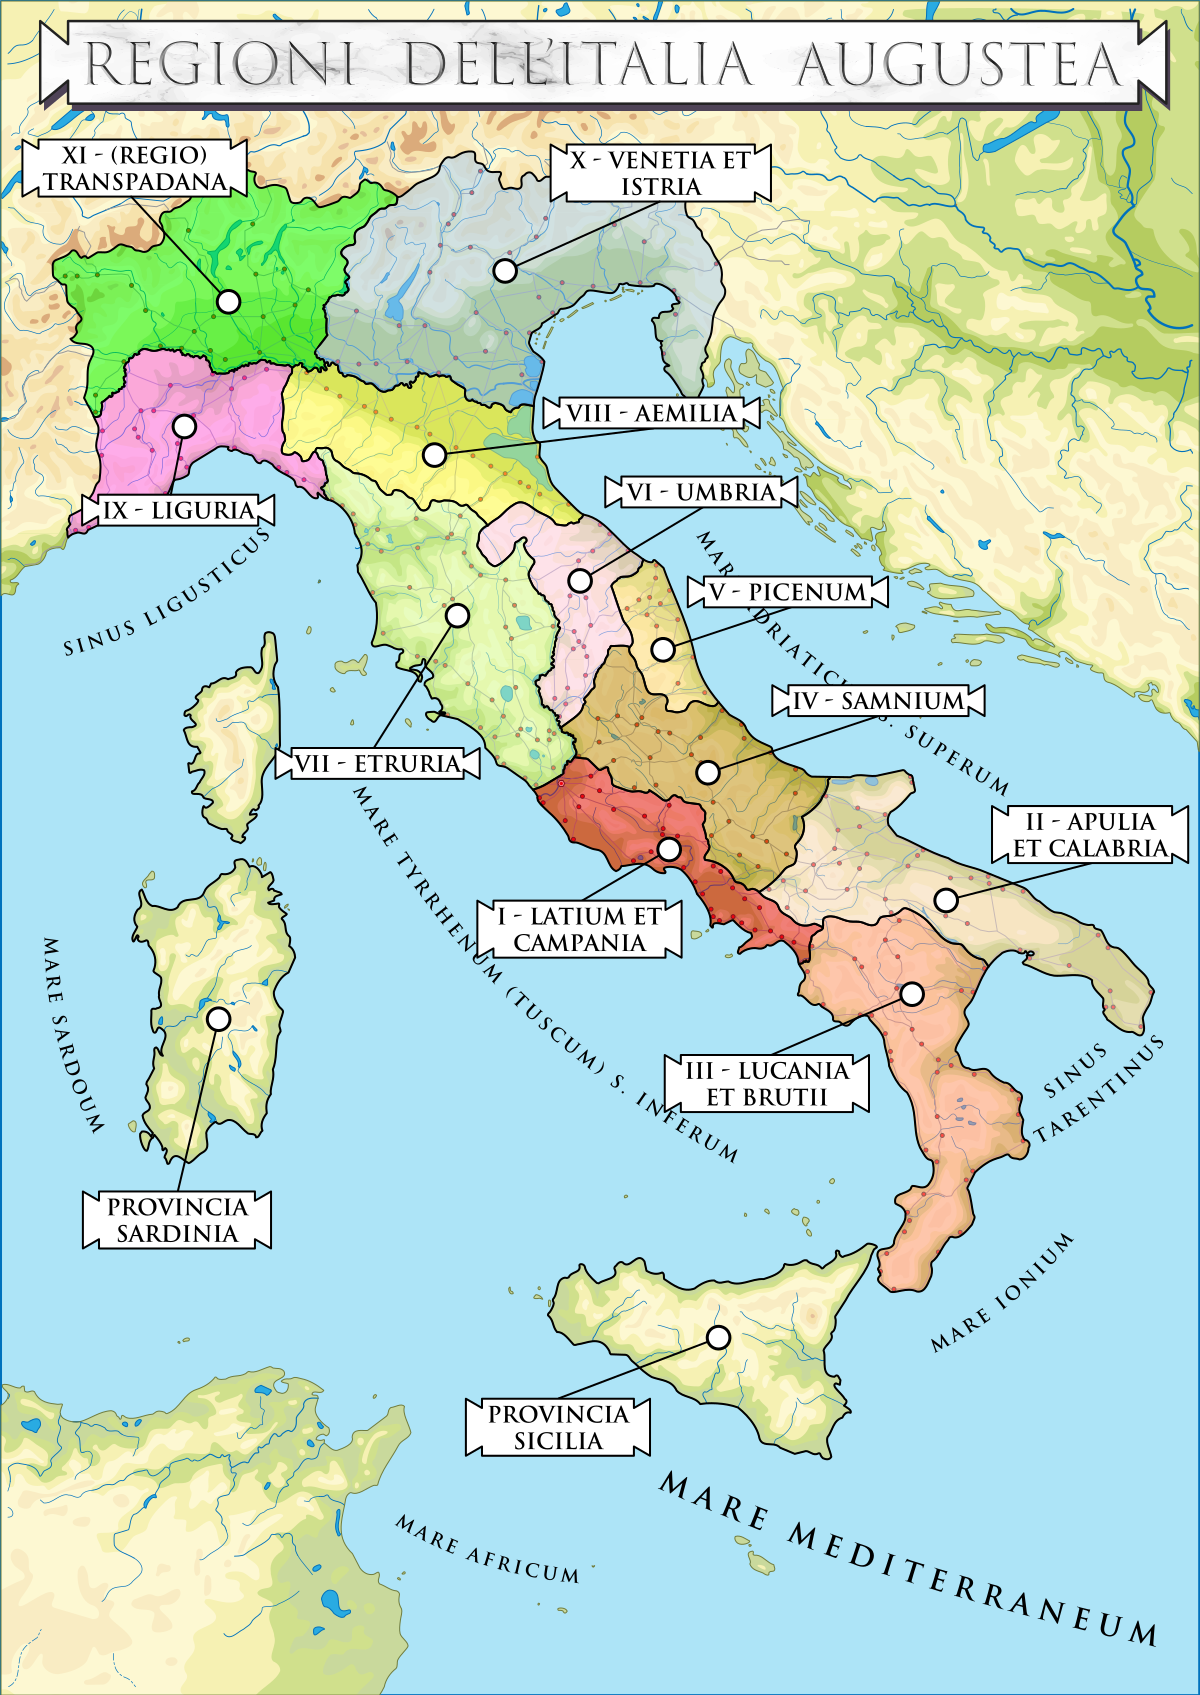 Name Of Italy Wikipedia